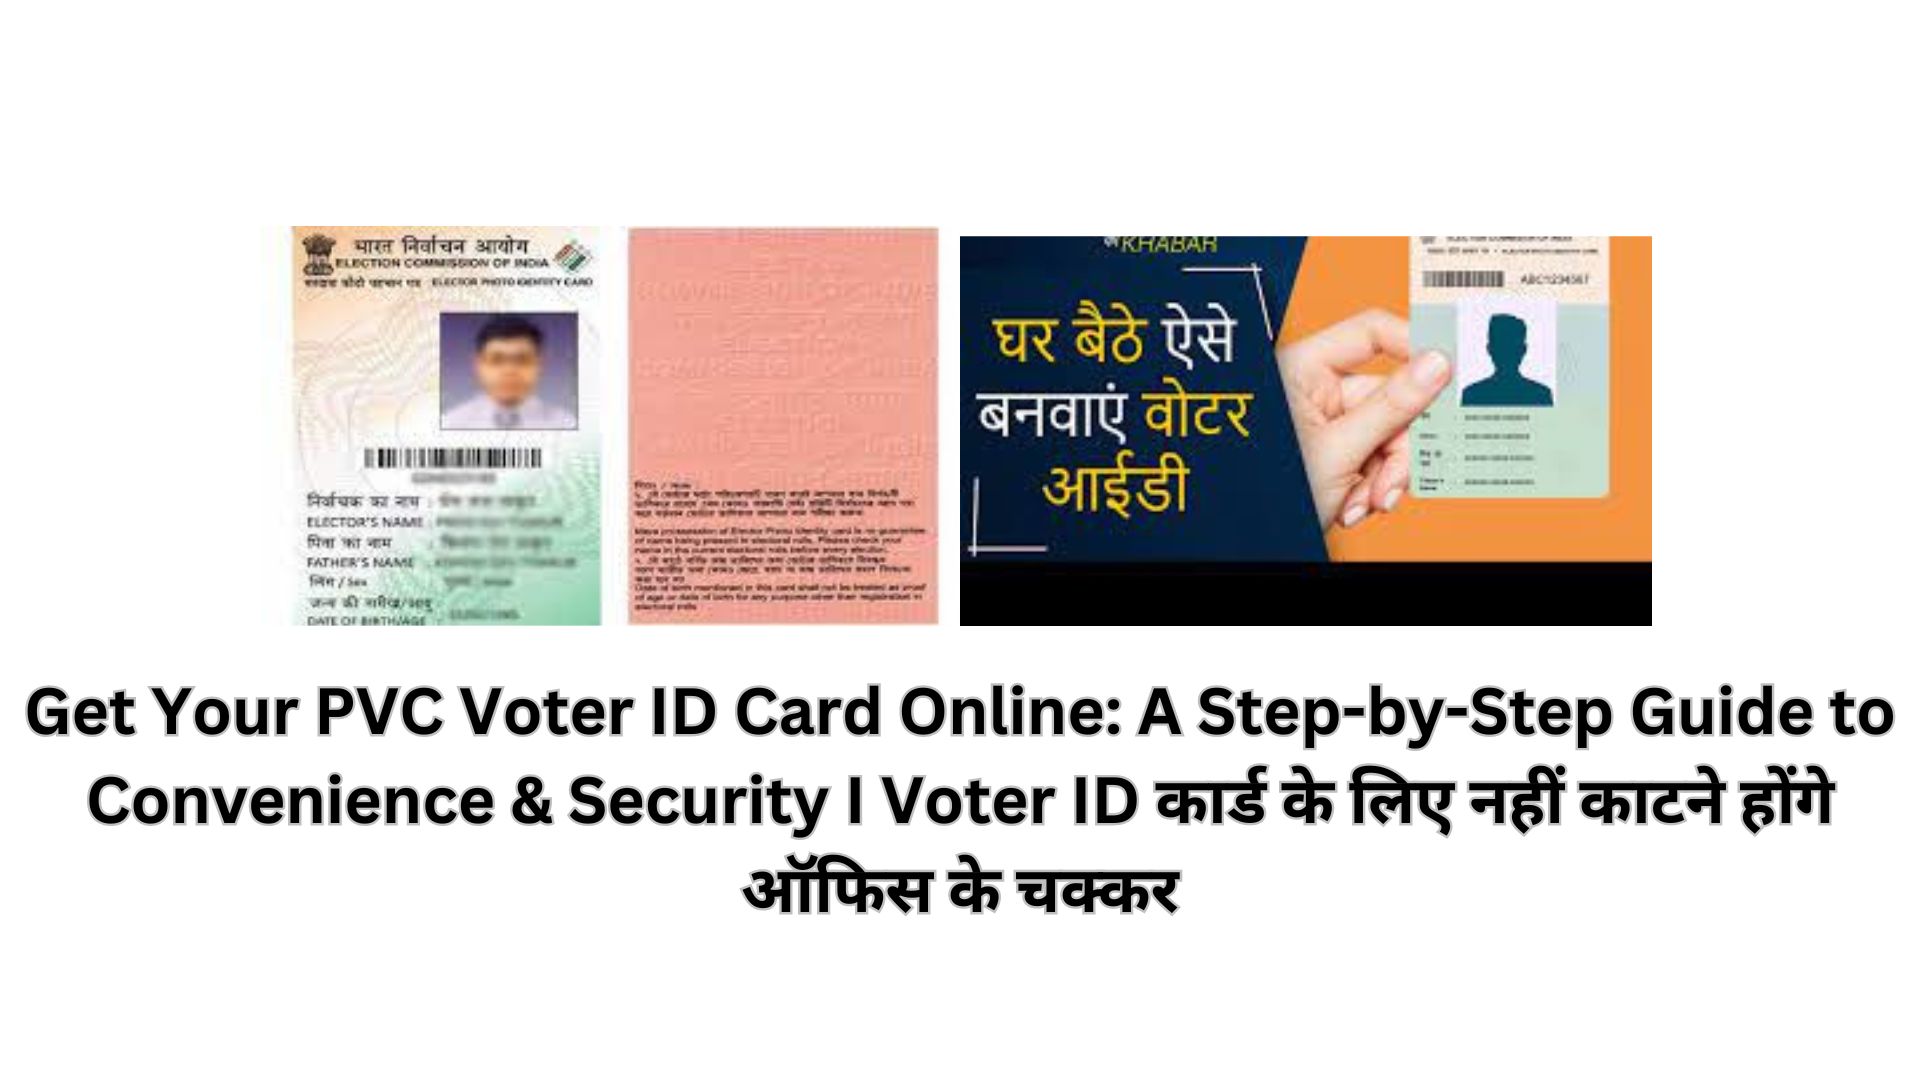 Get Your PVC Voter ID Card Online: A Step-by-Step Guide to Convenience & Security I Voter ID कार्ड के लिए नहीं काटने होंगे ऑफिस के चक्कर